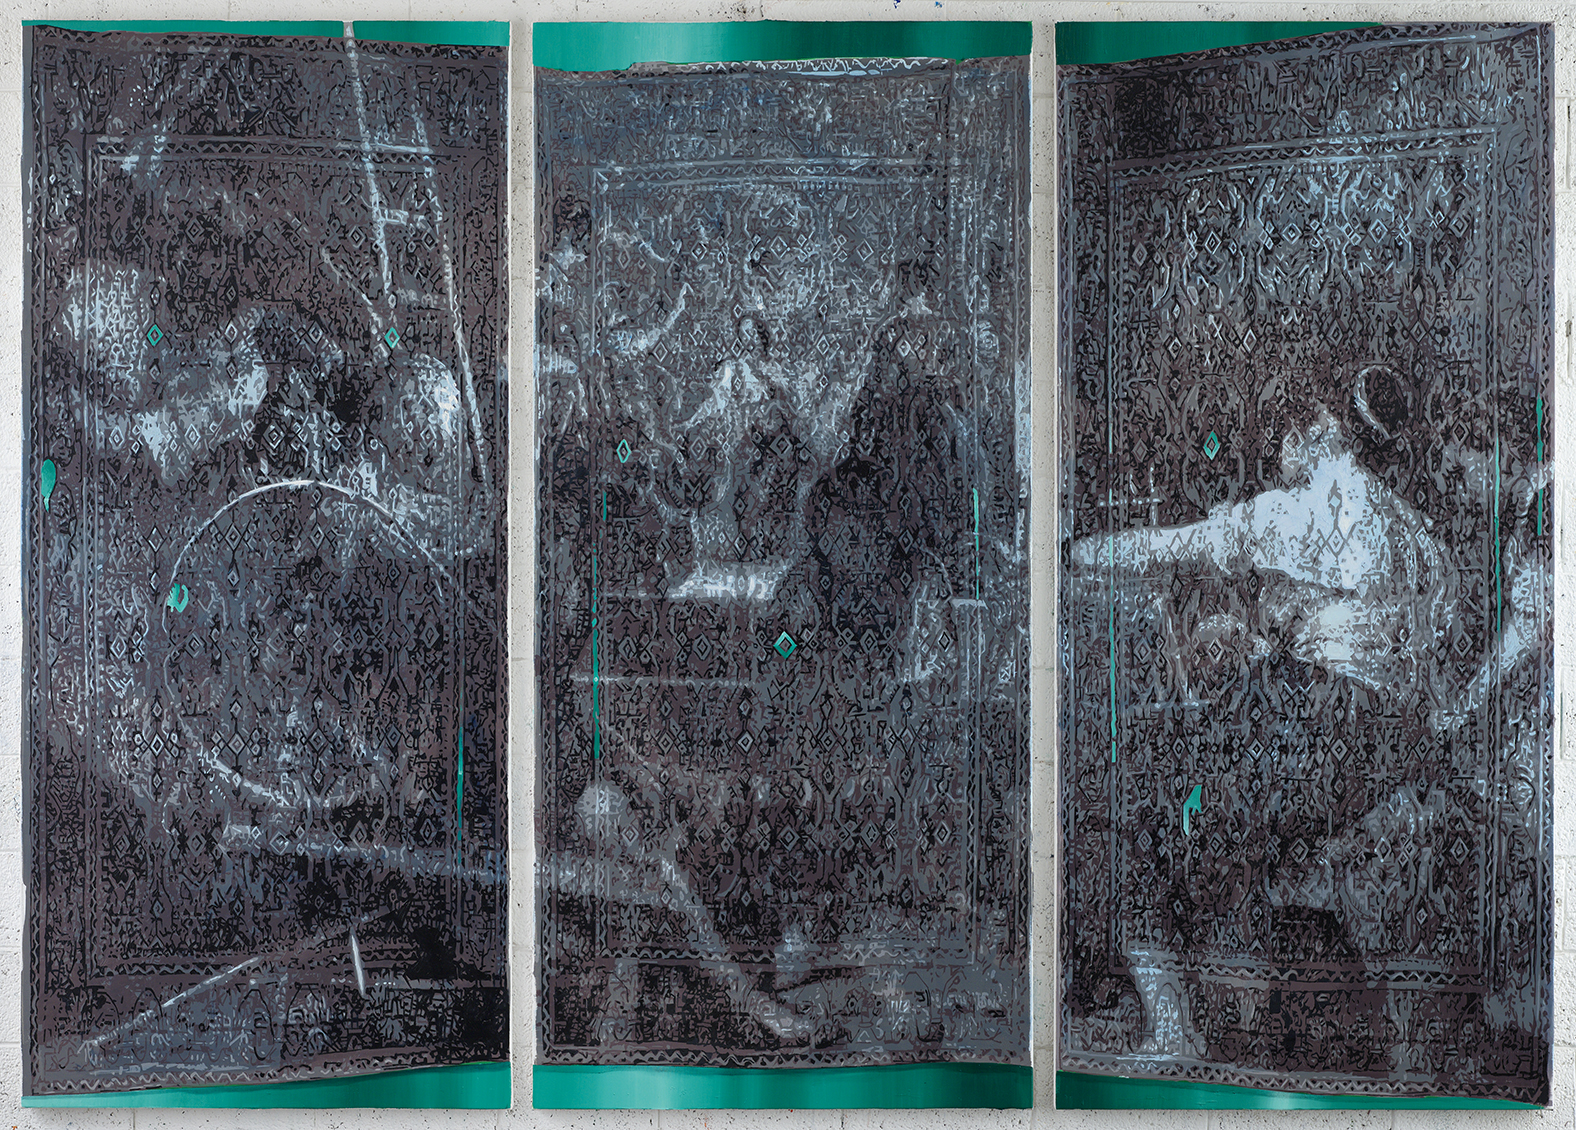 Oren Eliav, Loom, 2018, triptych, oil on canvas, 3 panels, 240 x 110 cm each